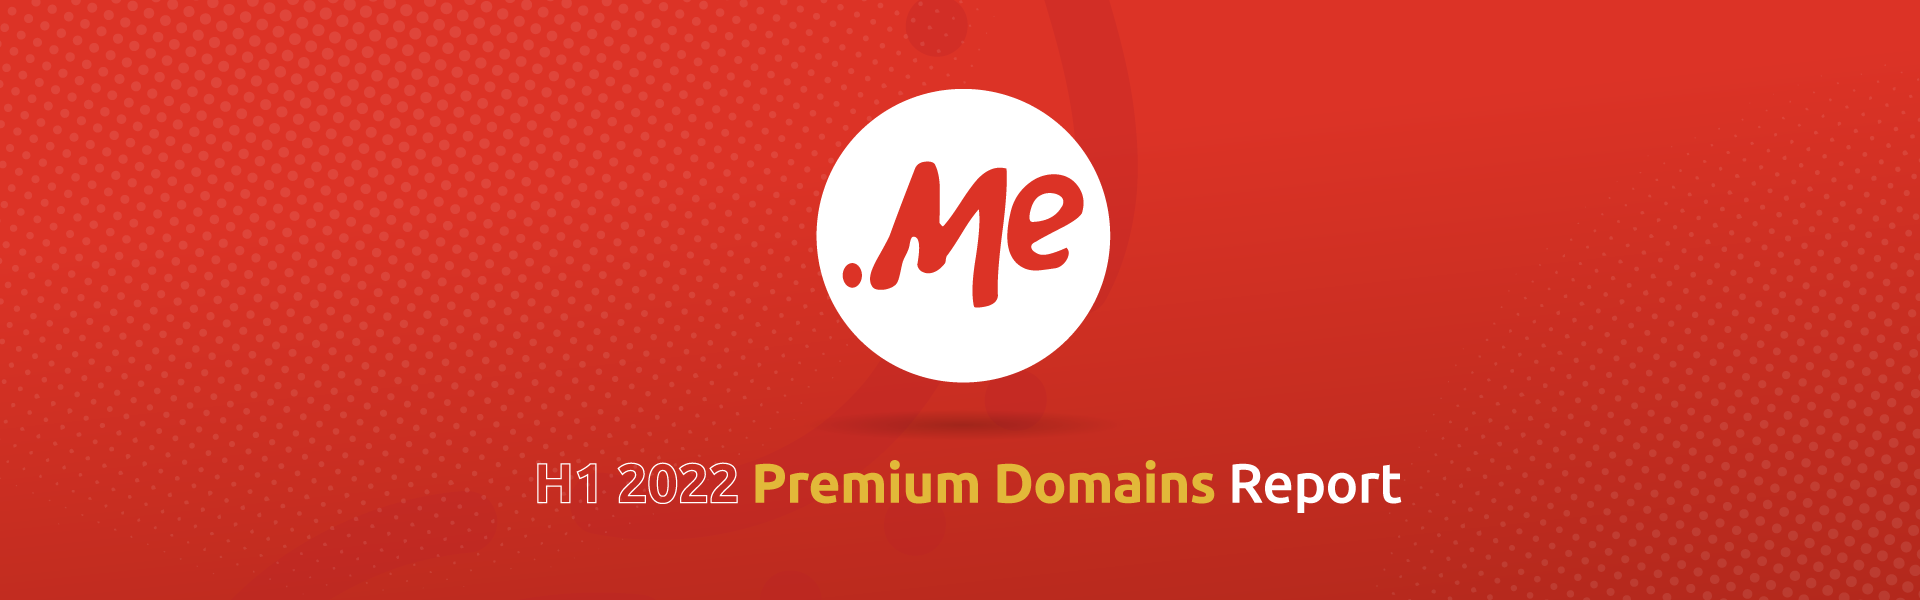 H1 2022 .ME Premium Domain Report